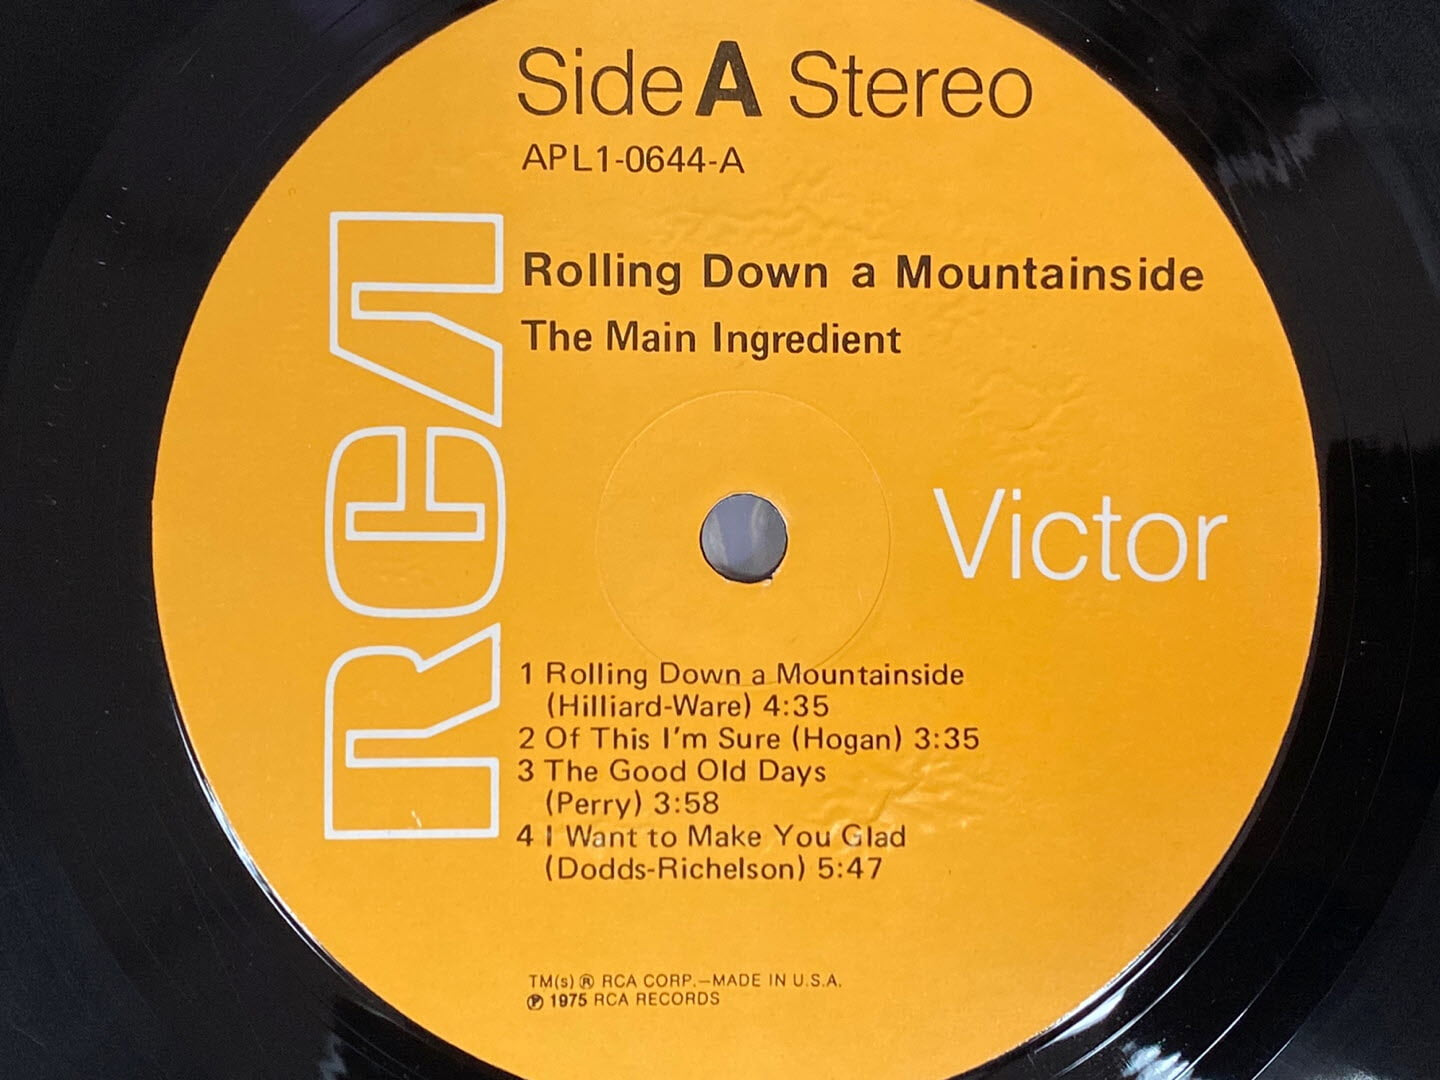 [LP] 메인 인그레디언트 - The Main Ingredient - Rolling Down A Mountainside LP [U.S반]